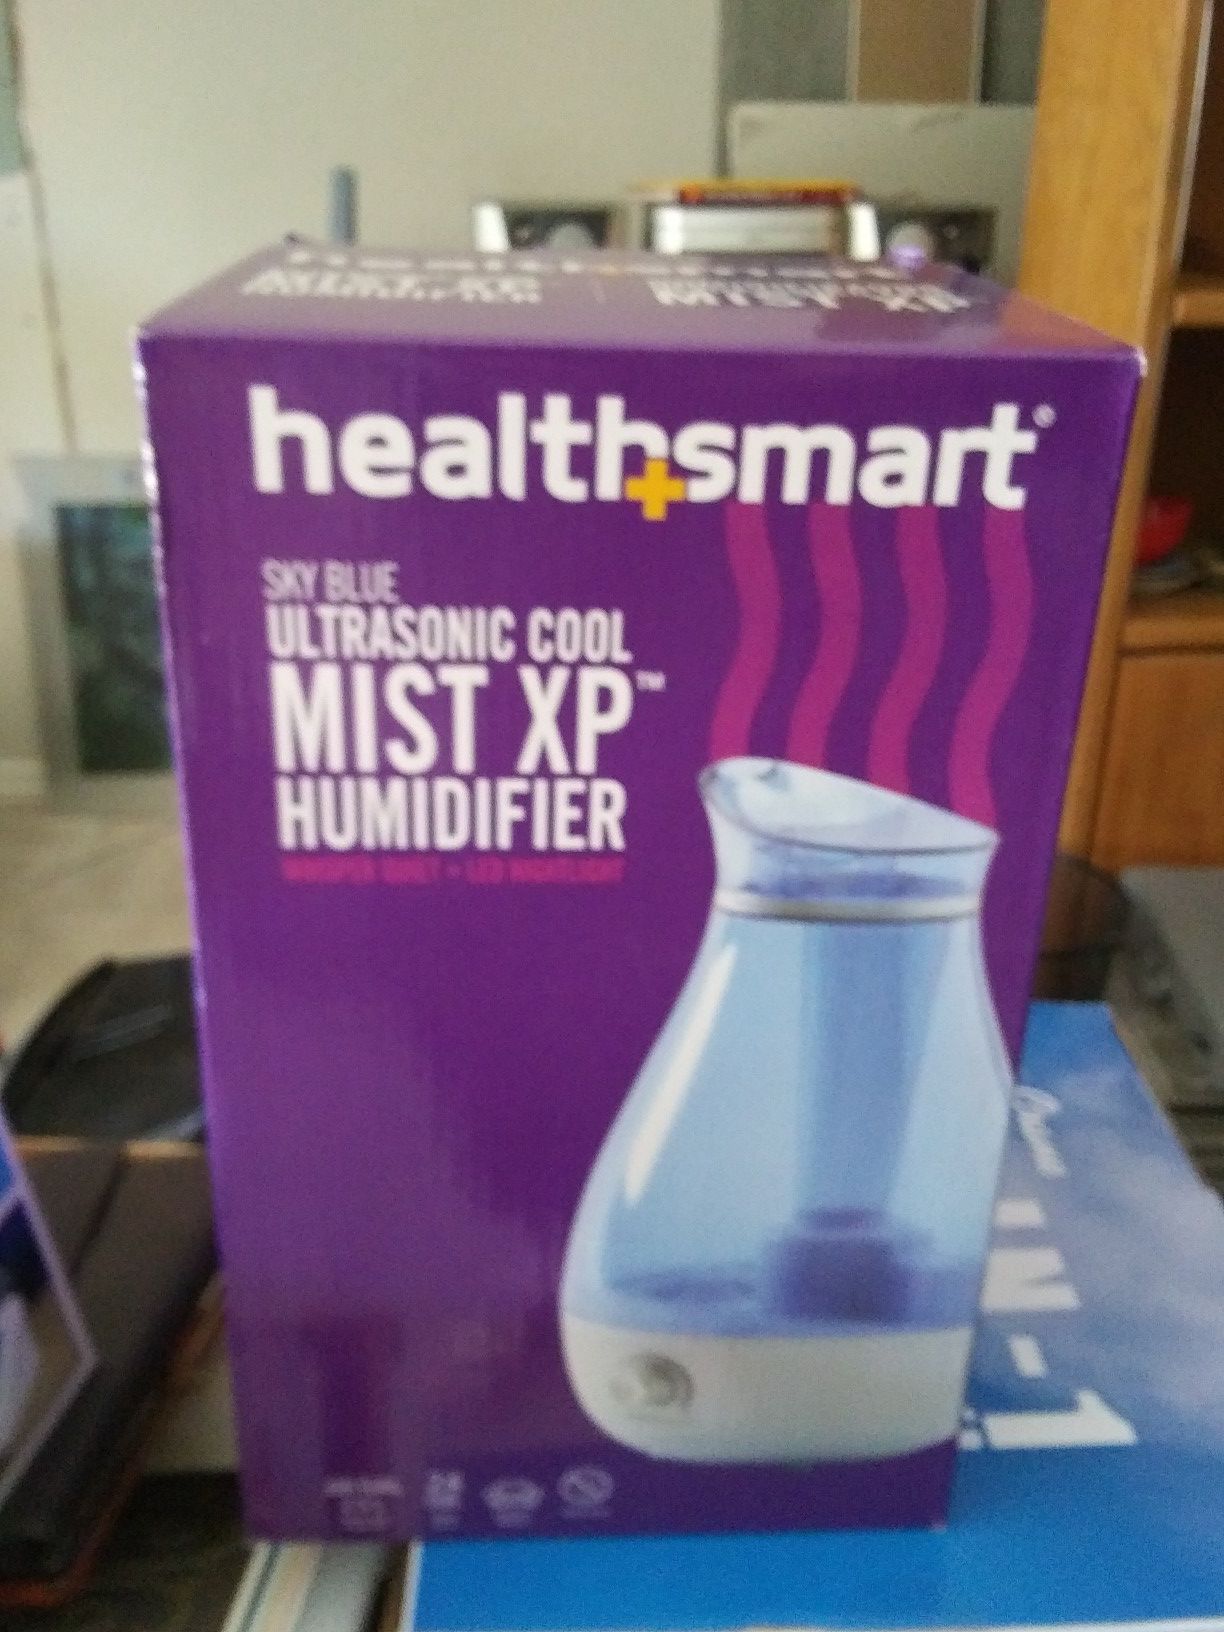 Health smart ultrasonic Cool mist. XP Humidifier